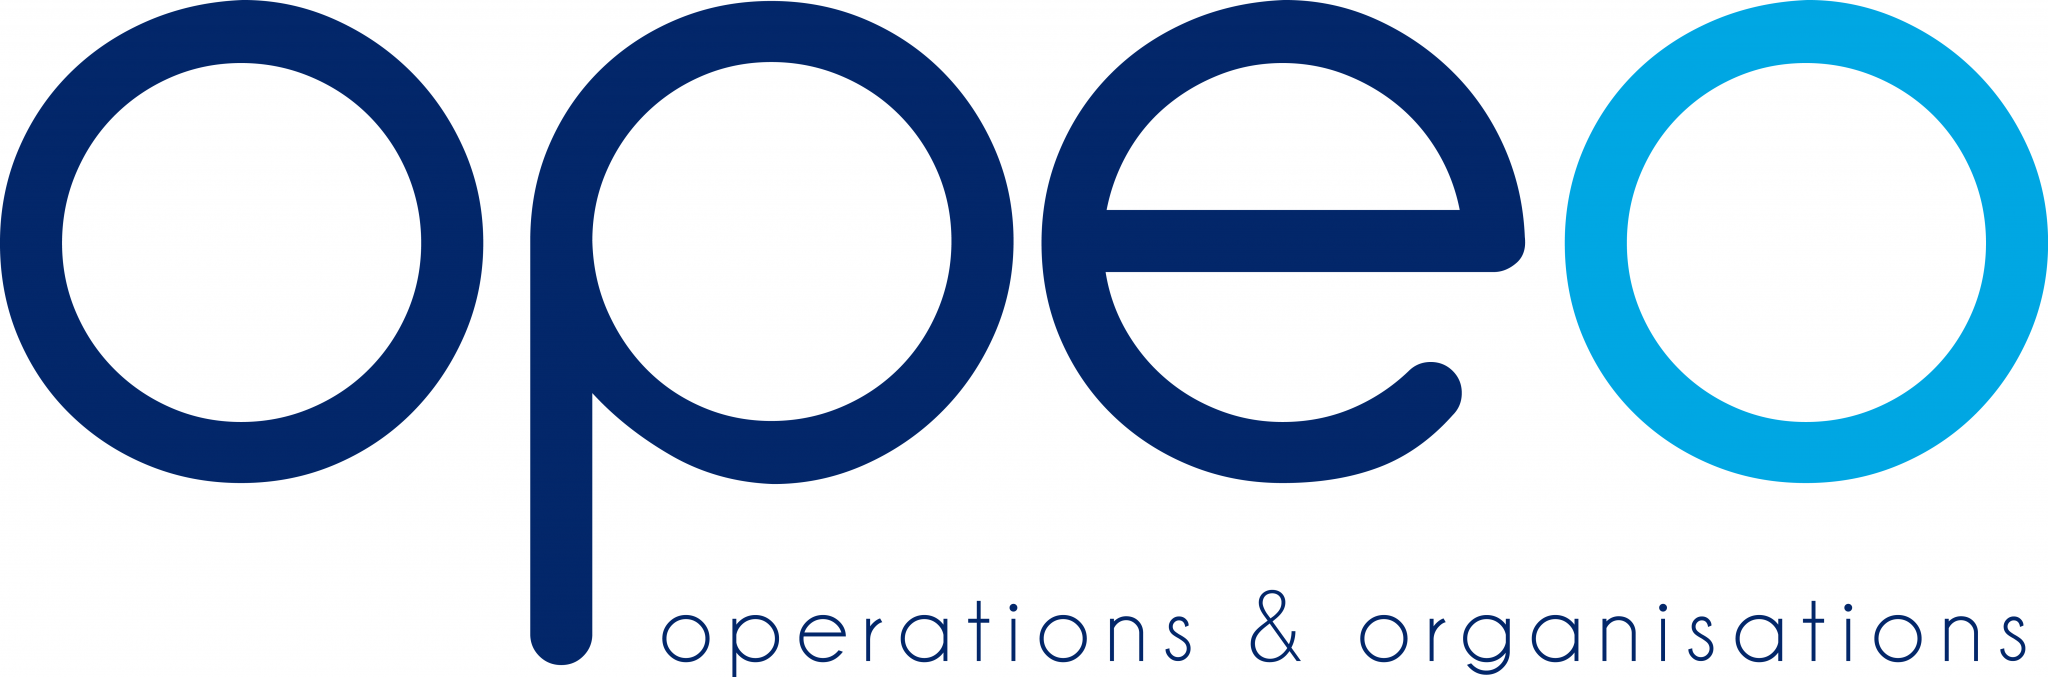 logo OPEO final - 2